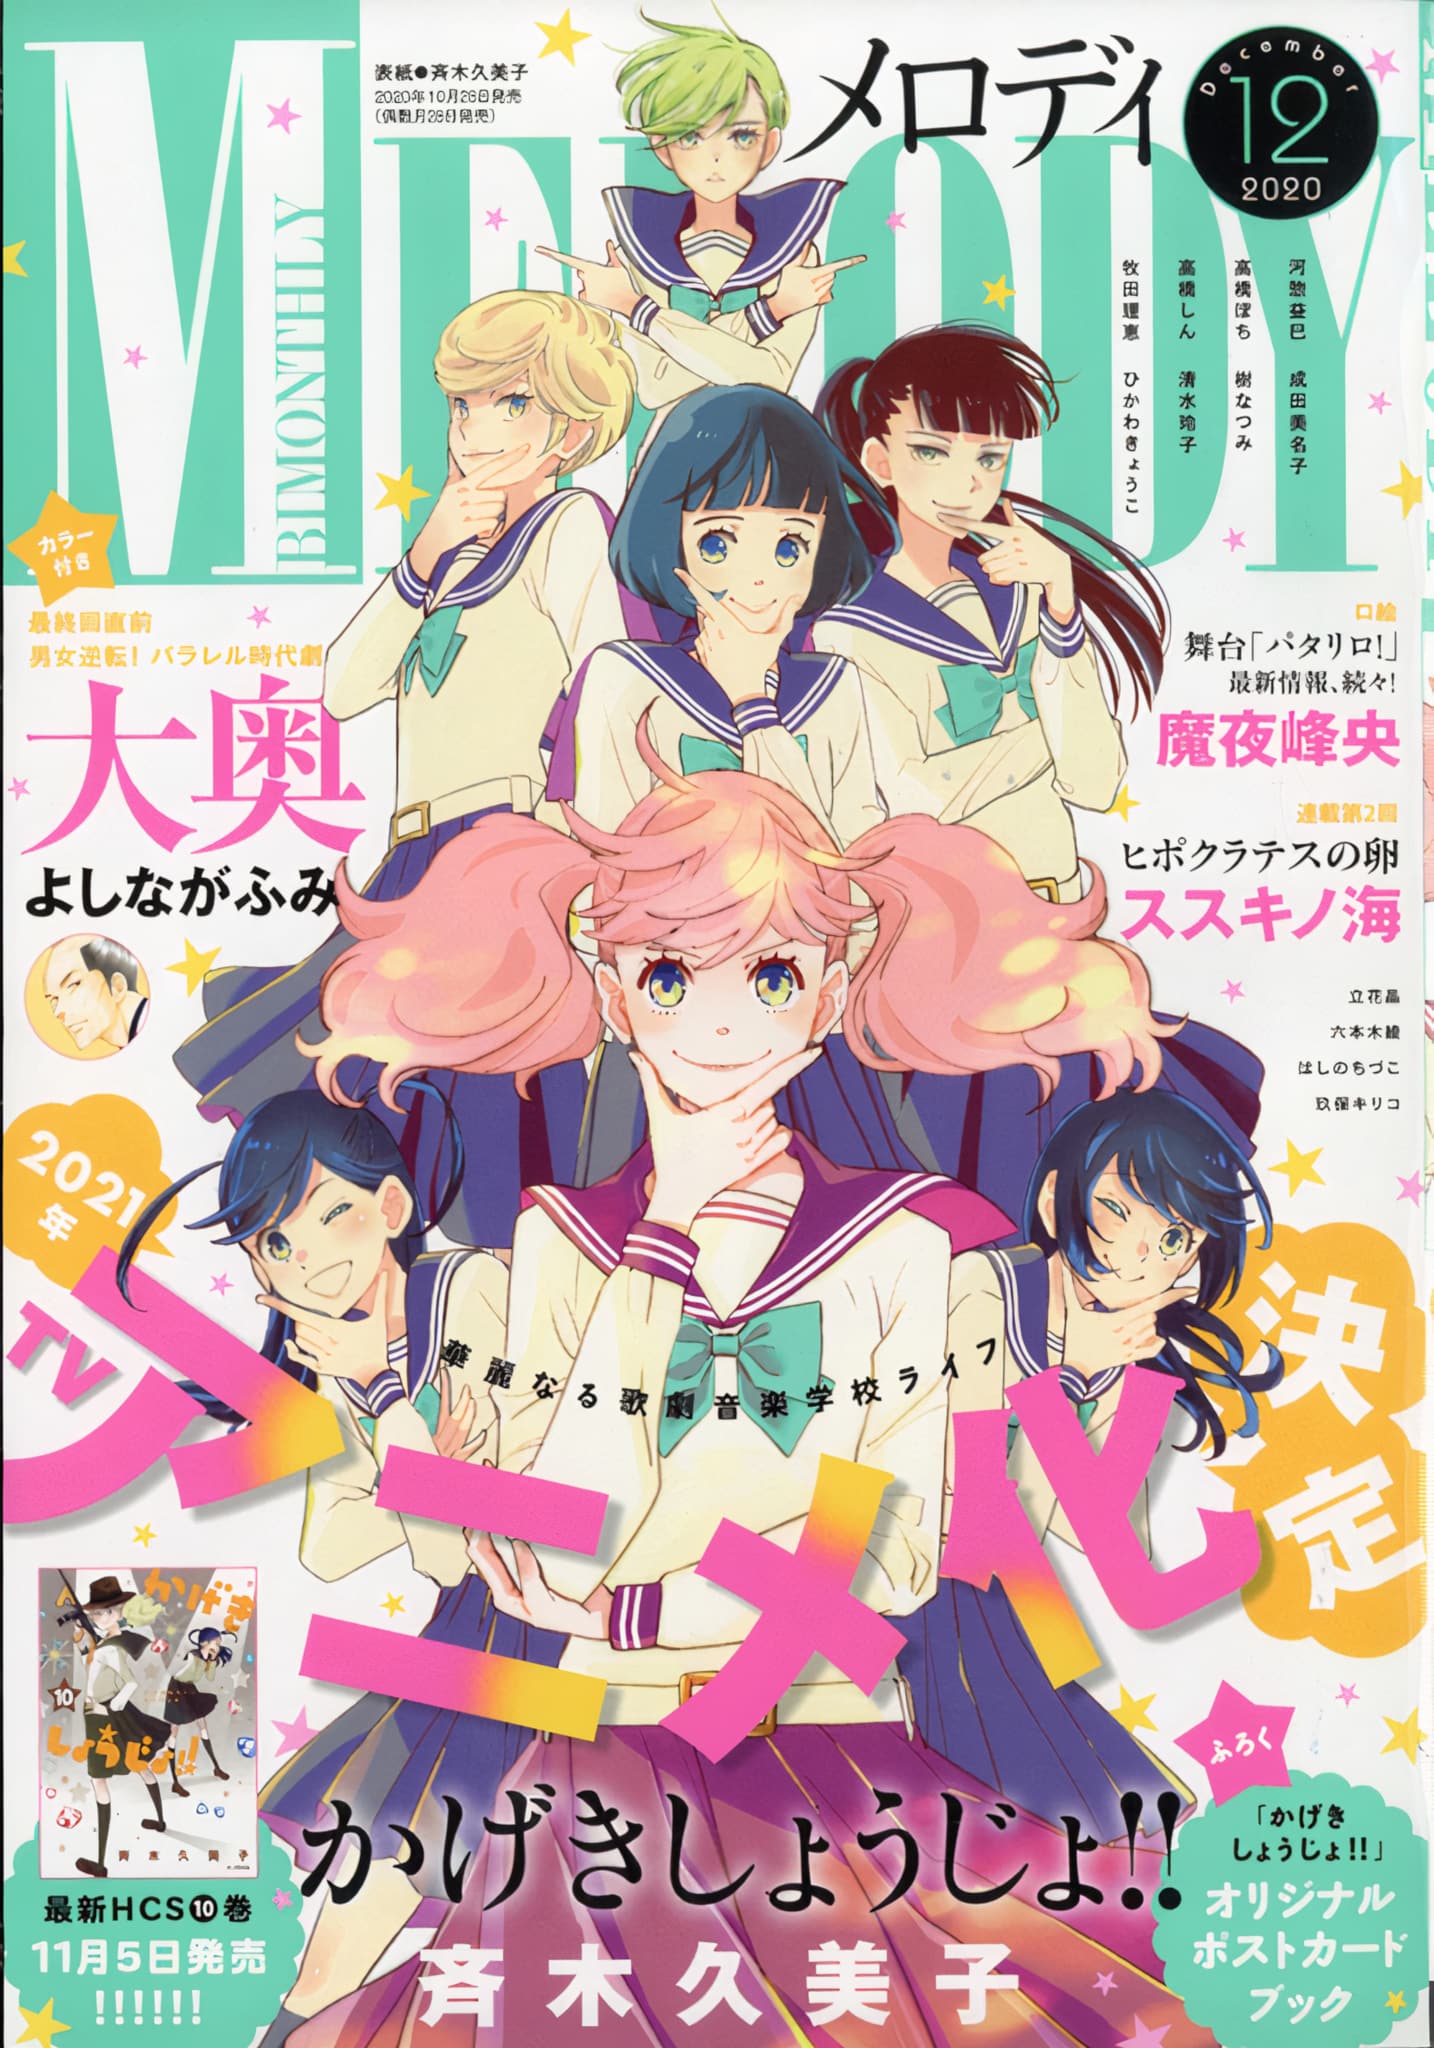 Annonce de anime Kageki Shoujo!! dans le magazine Melody